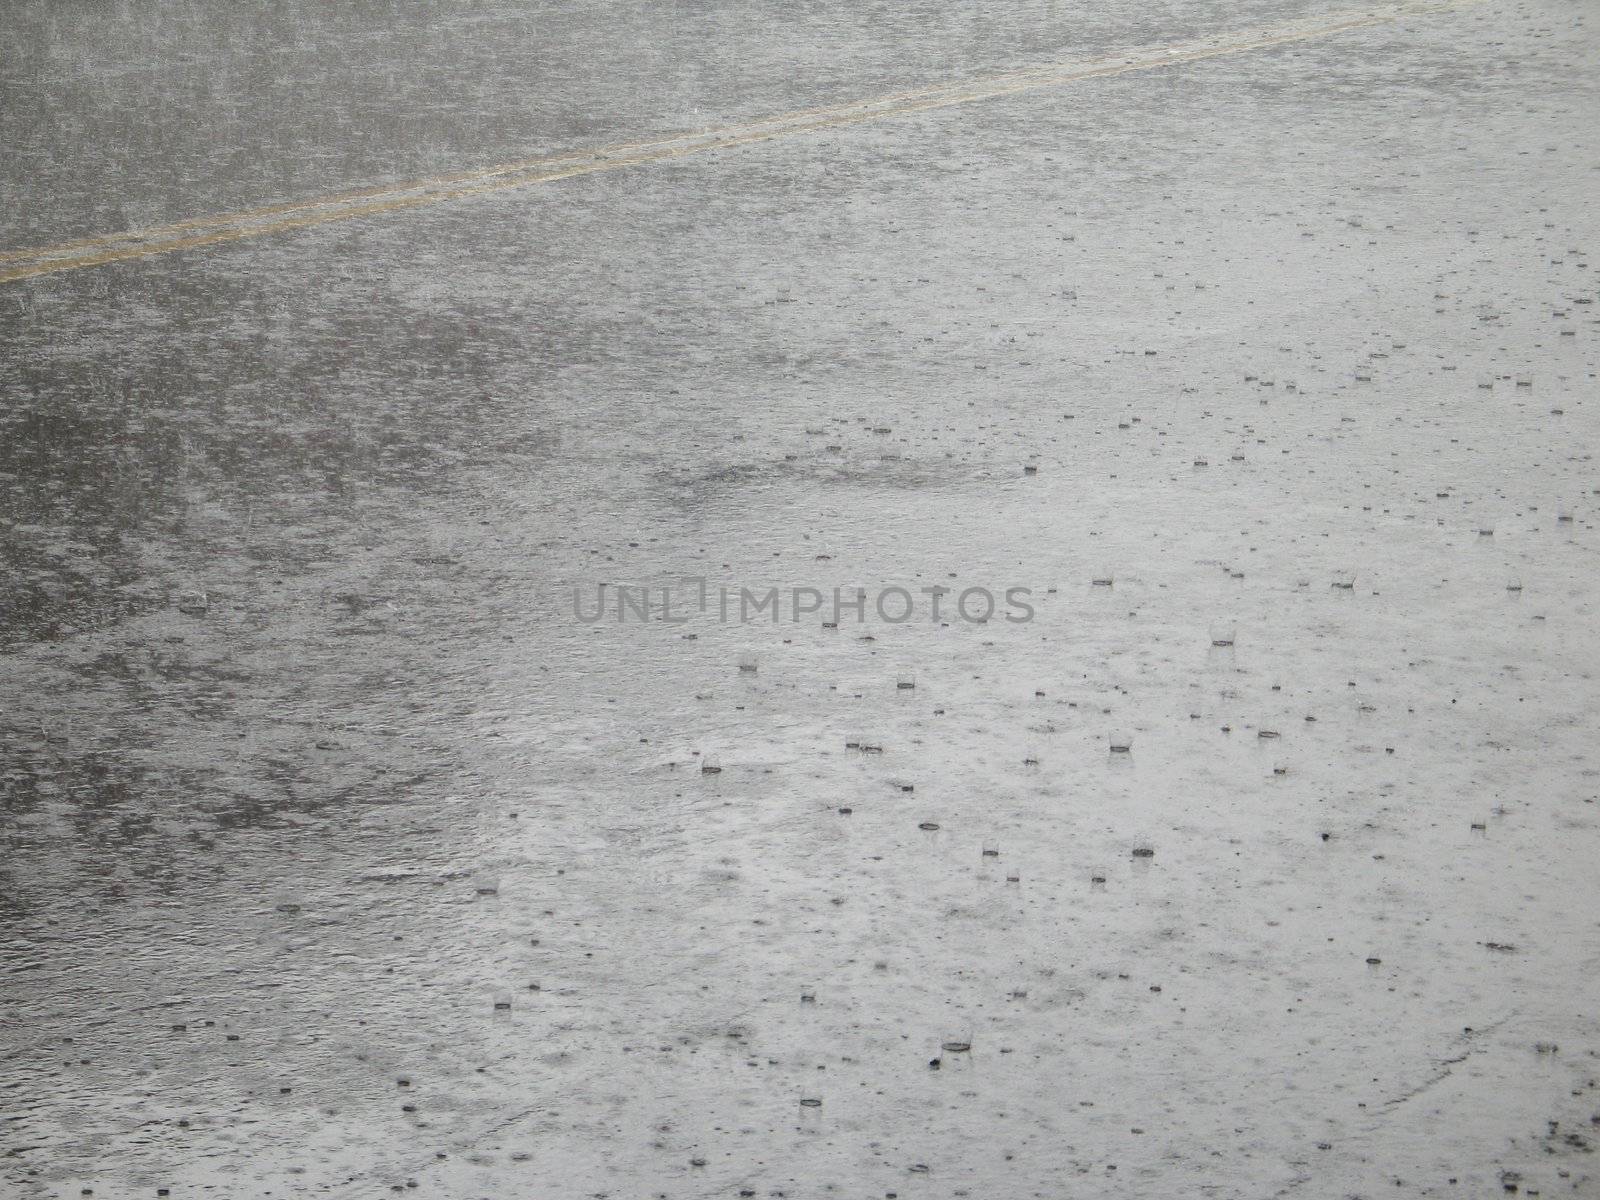 rain in the street